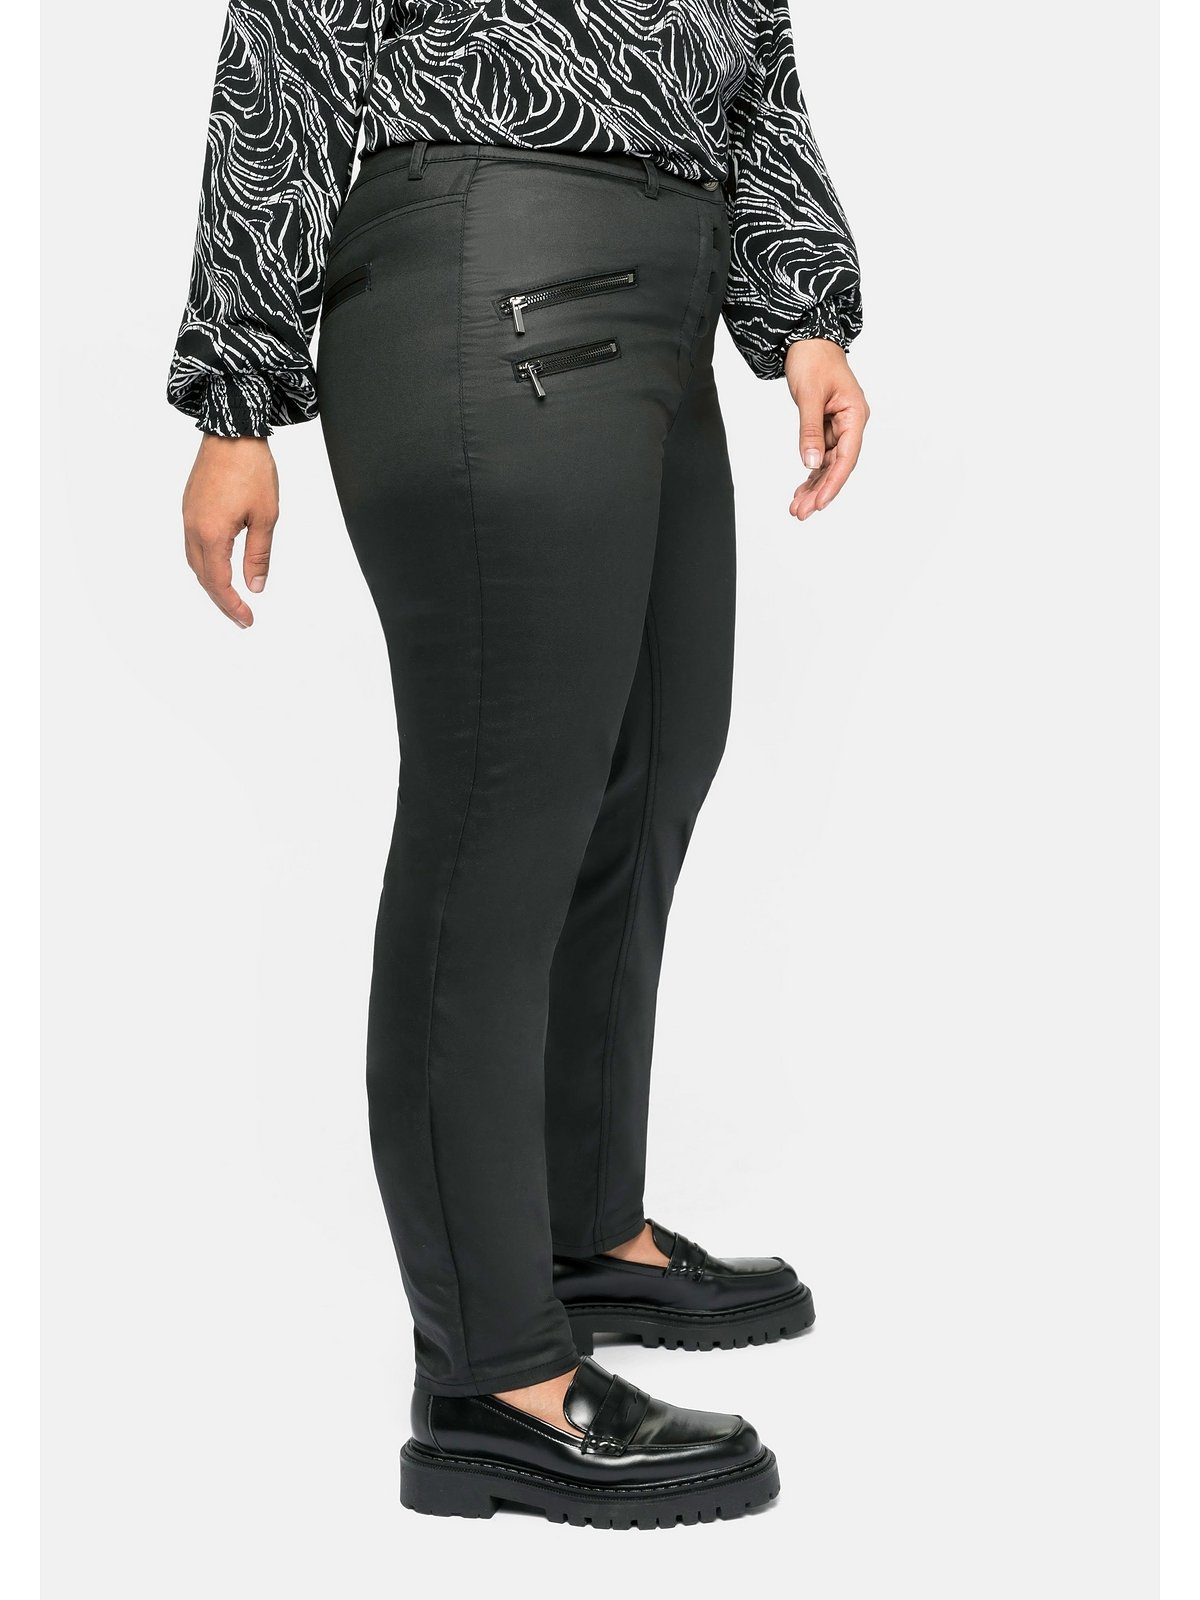 Damen Hosen Sheego Stretch-Hose Hose mit Zippern